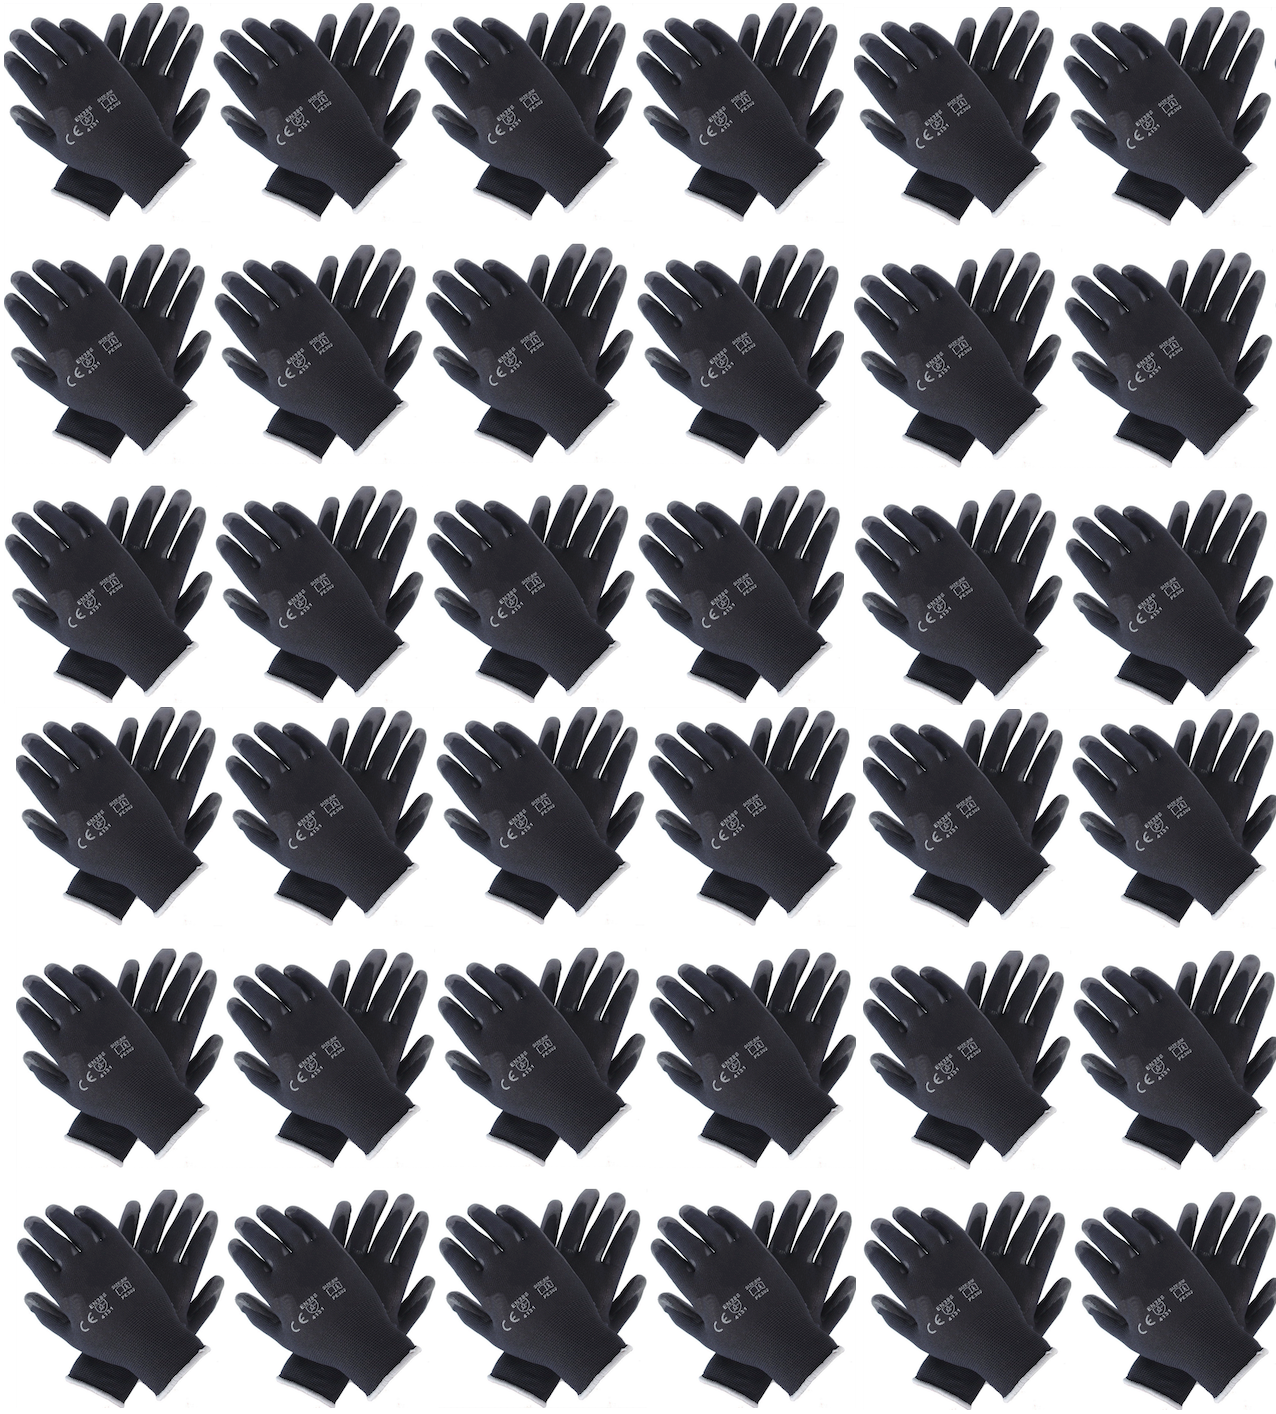 12x klebemeister® Nylon PU Handschuhe